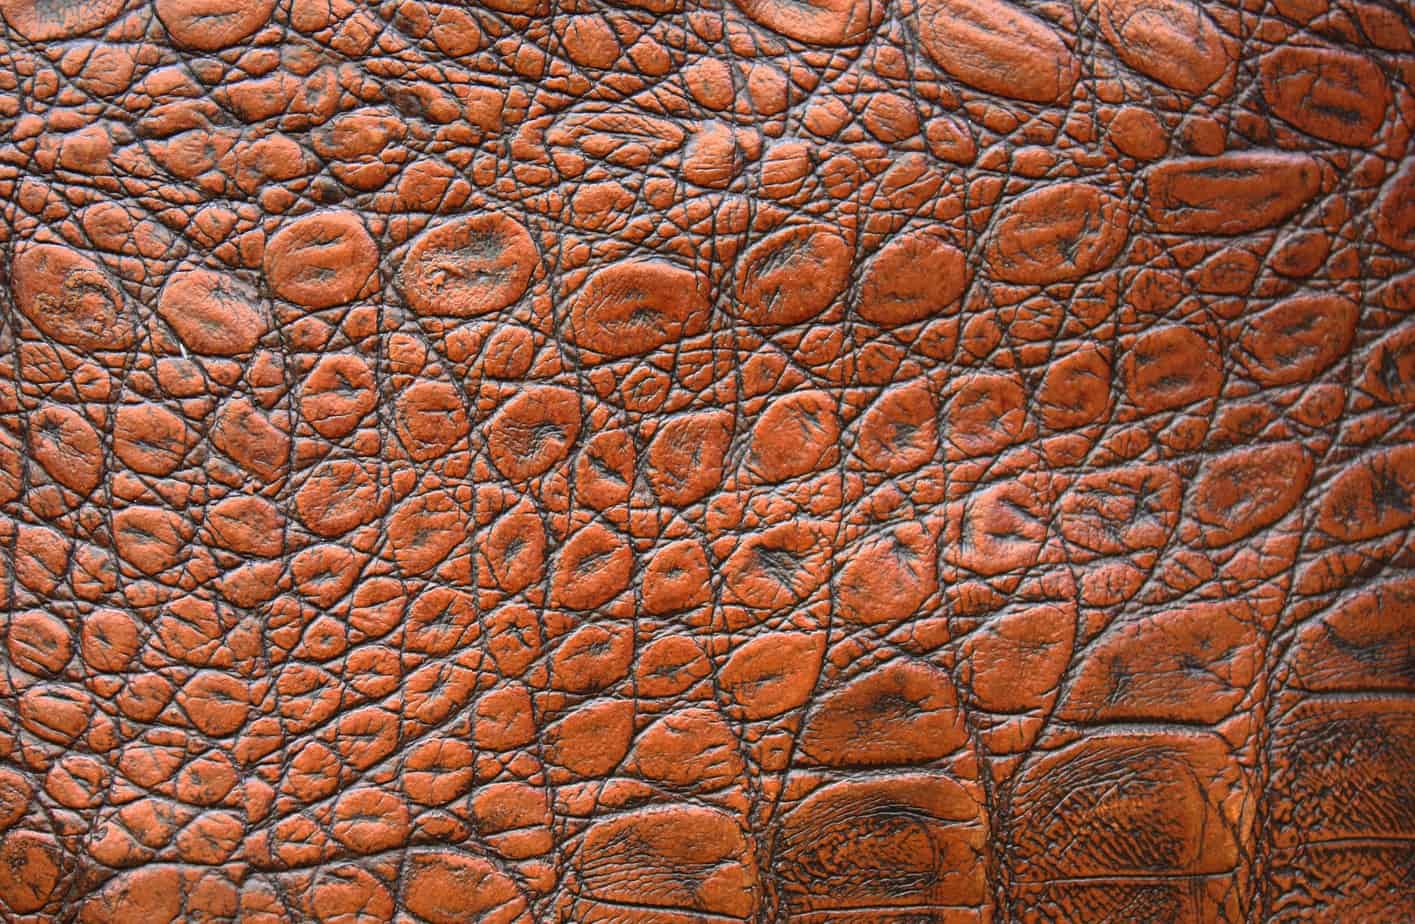 Cloeseup of brown leather skin